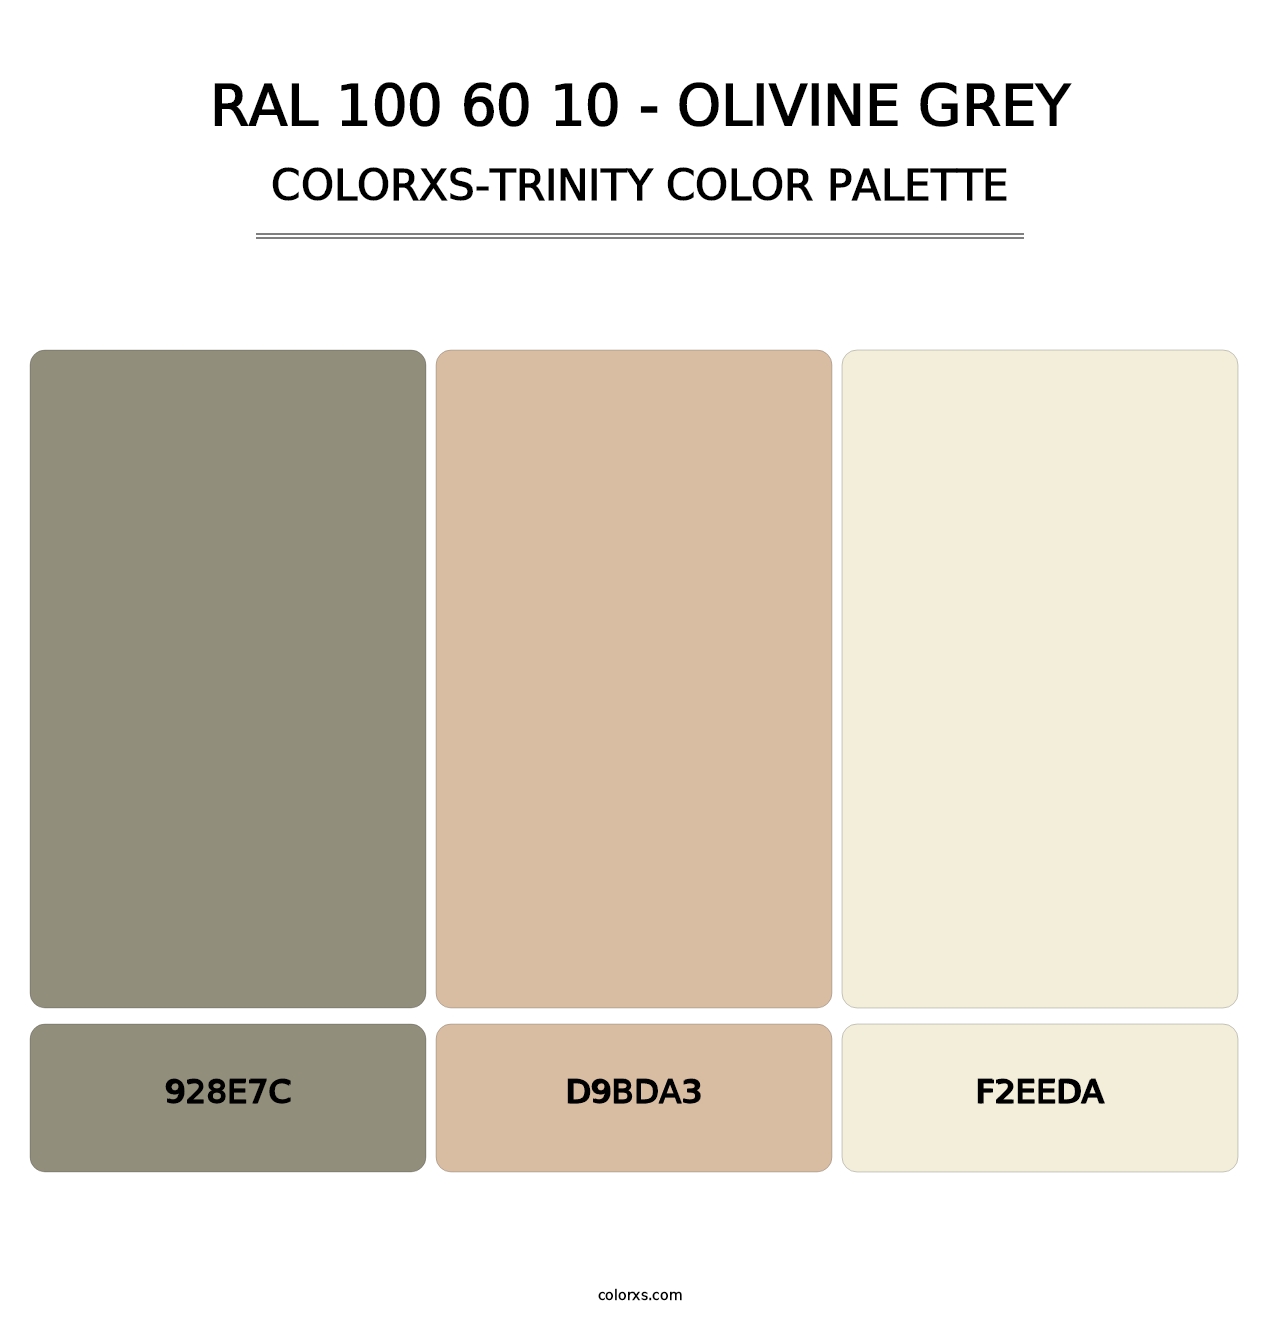 RAL 100 60 10 - Olivine Grey - Colorxs Trinity Palette